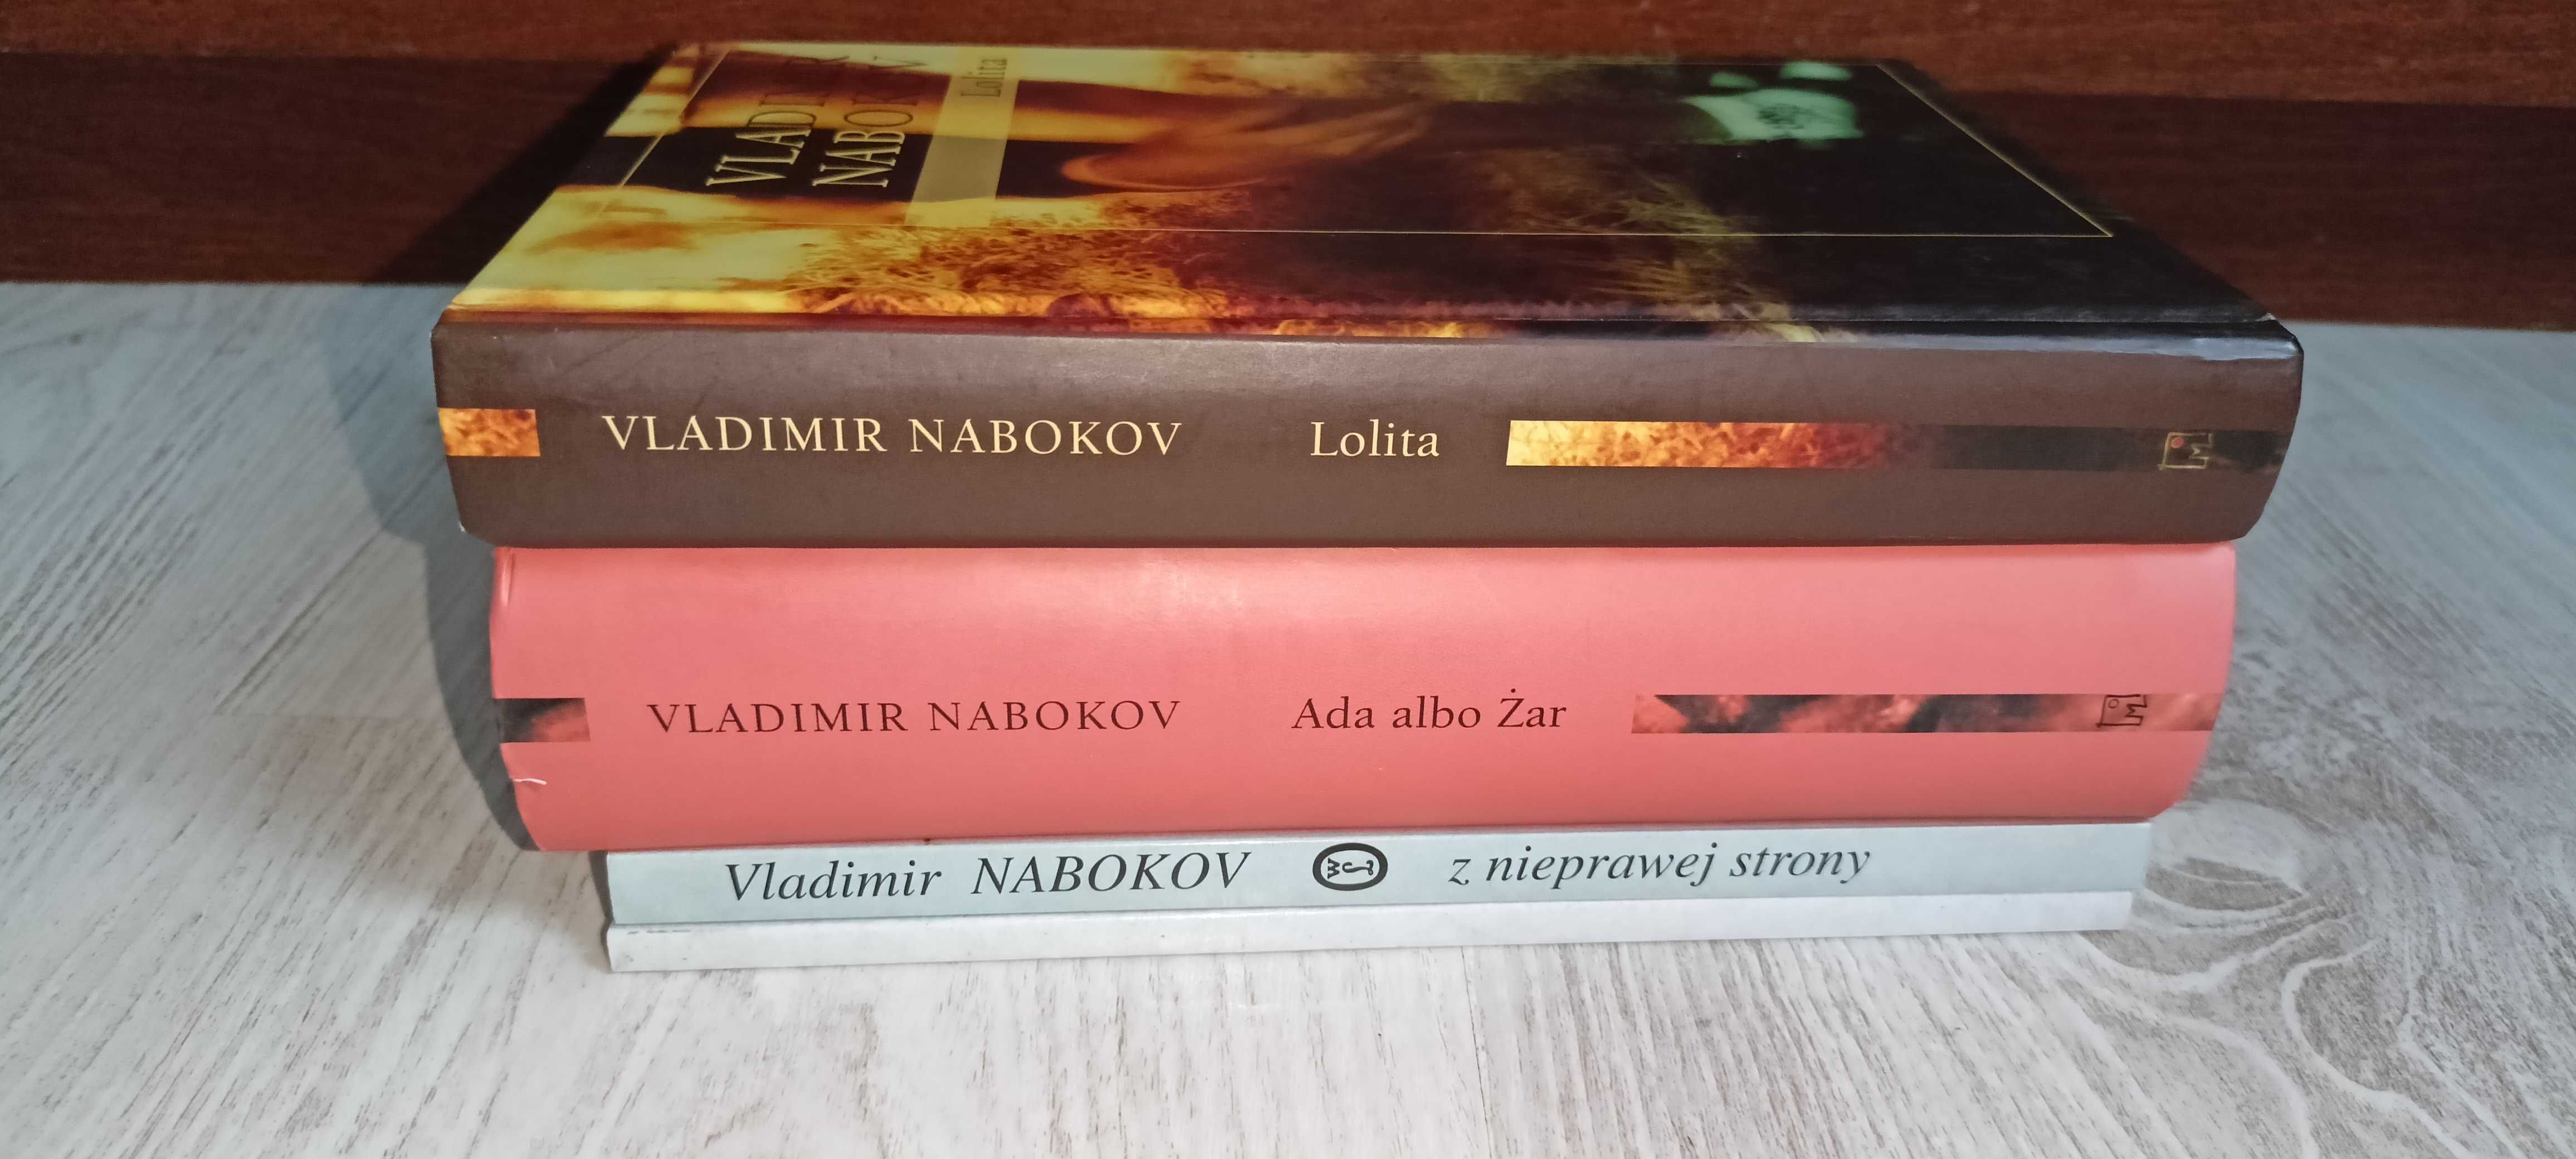 Vladimir Nabokov Lolita Oko Z nieprawej strony Ada albo Żar